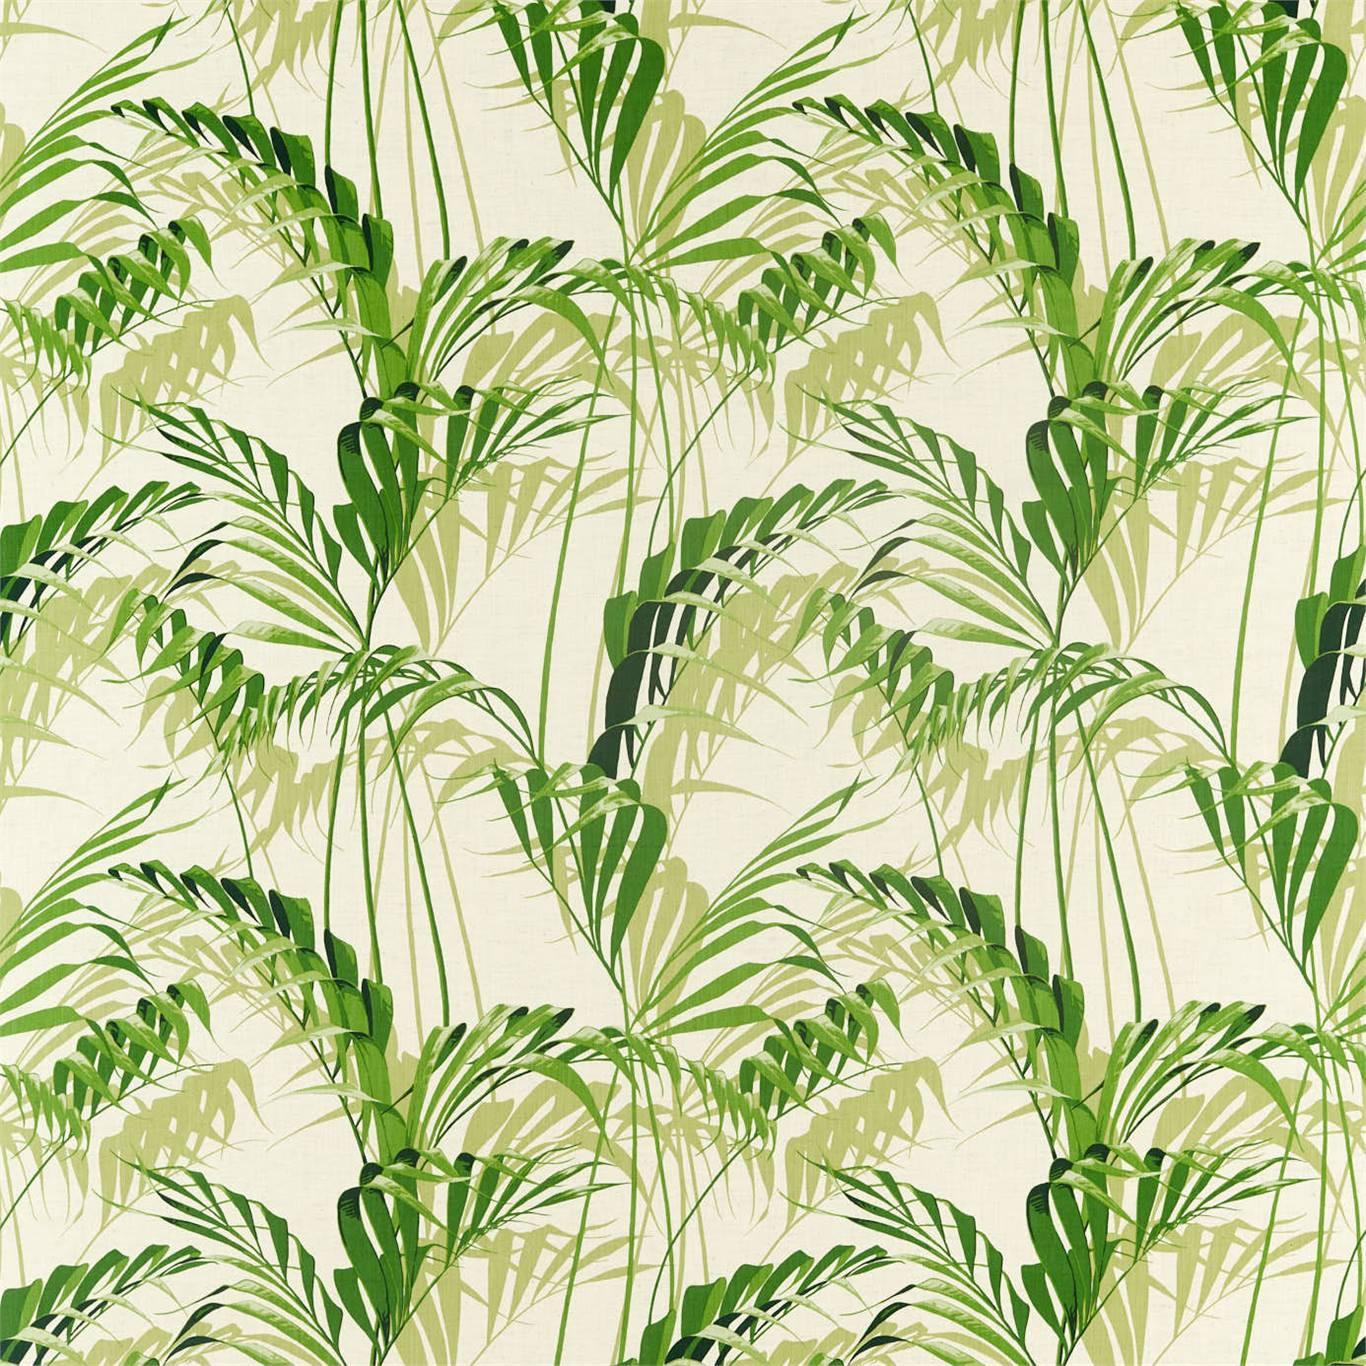 Tessuto Sanderson Palm House - Brand_Sanderson, Fantasia_Natura, Uso_Rivestimento cuscini, Uso_Rivestimento poltrone, Uso_Tende - Tessuti - Sanderson